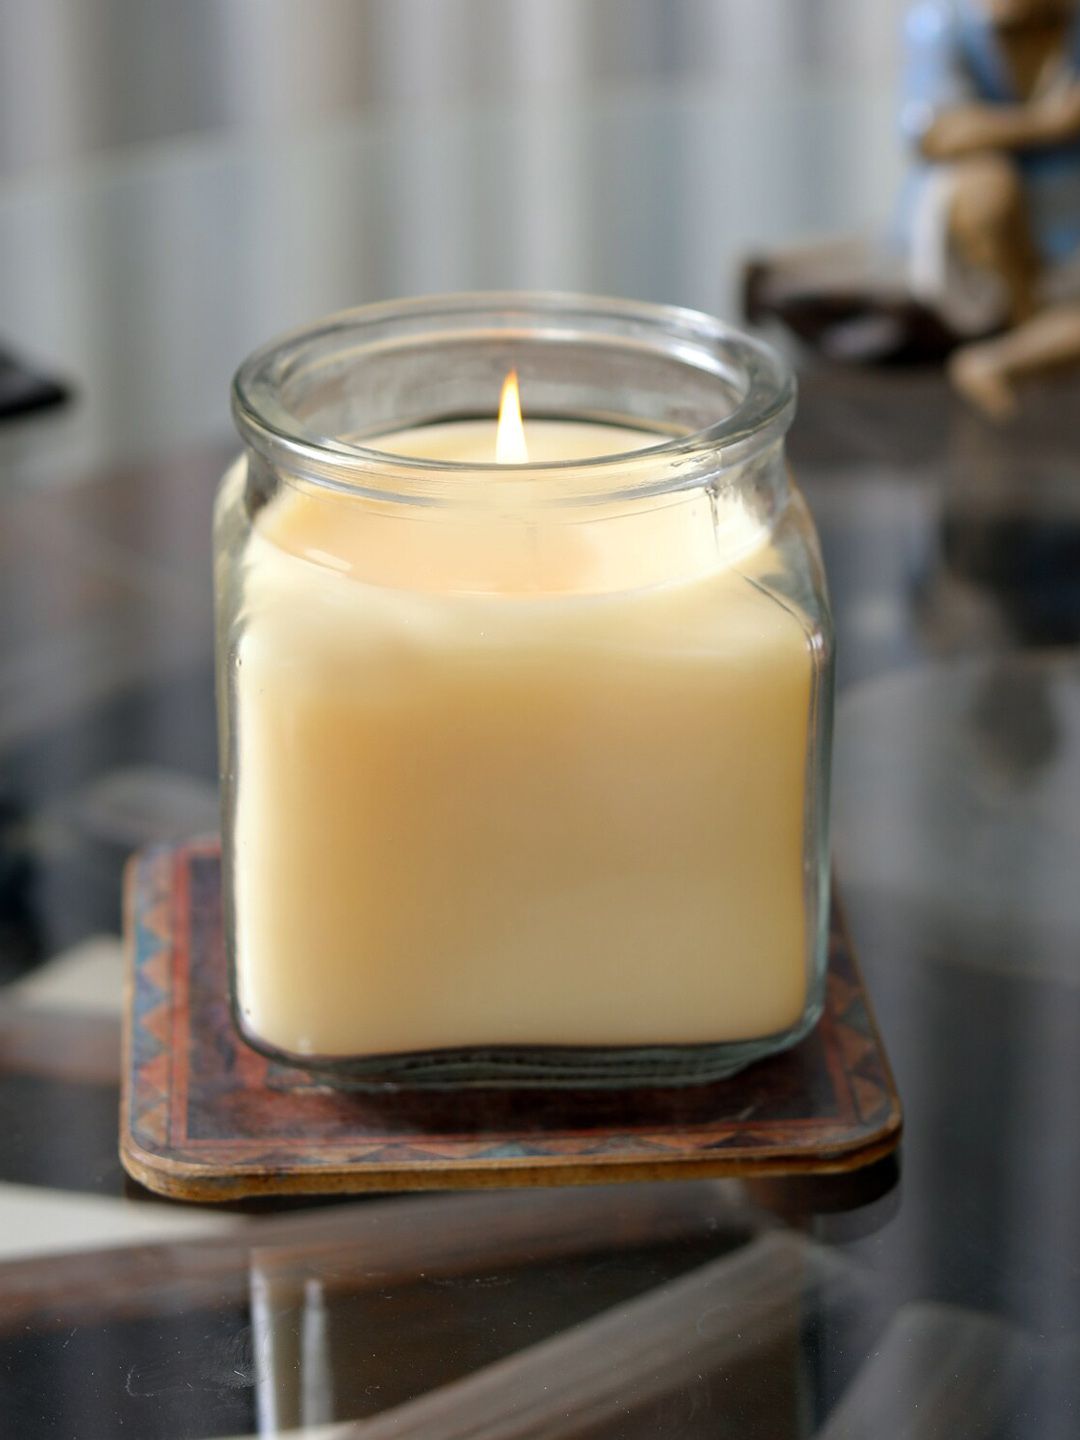 HOSLEY Cream Solid Vanilla Scented Candle Jar Price in India